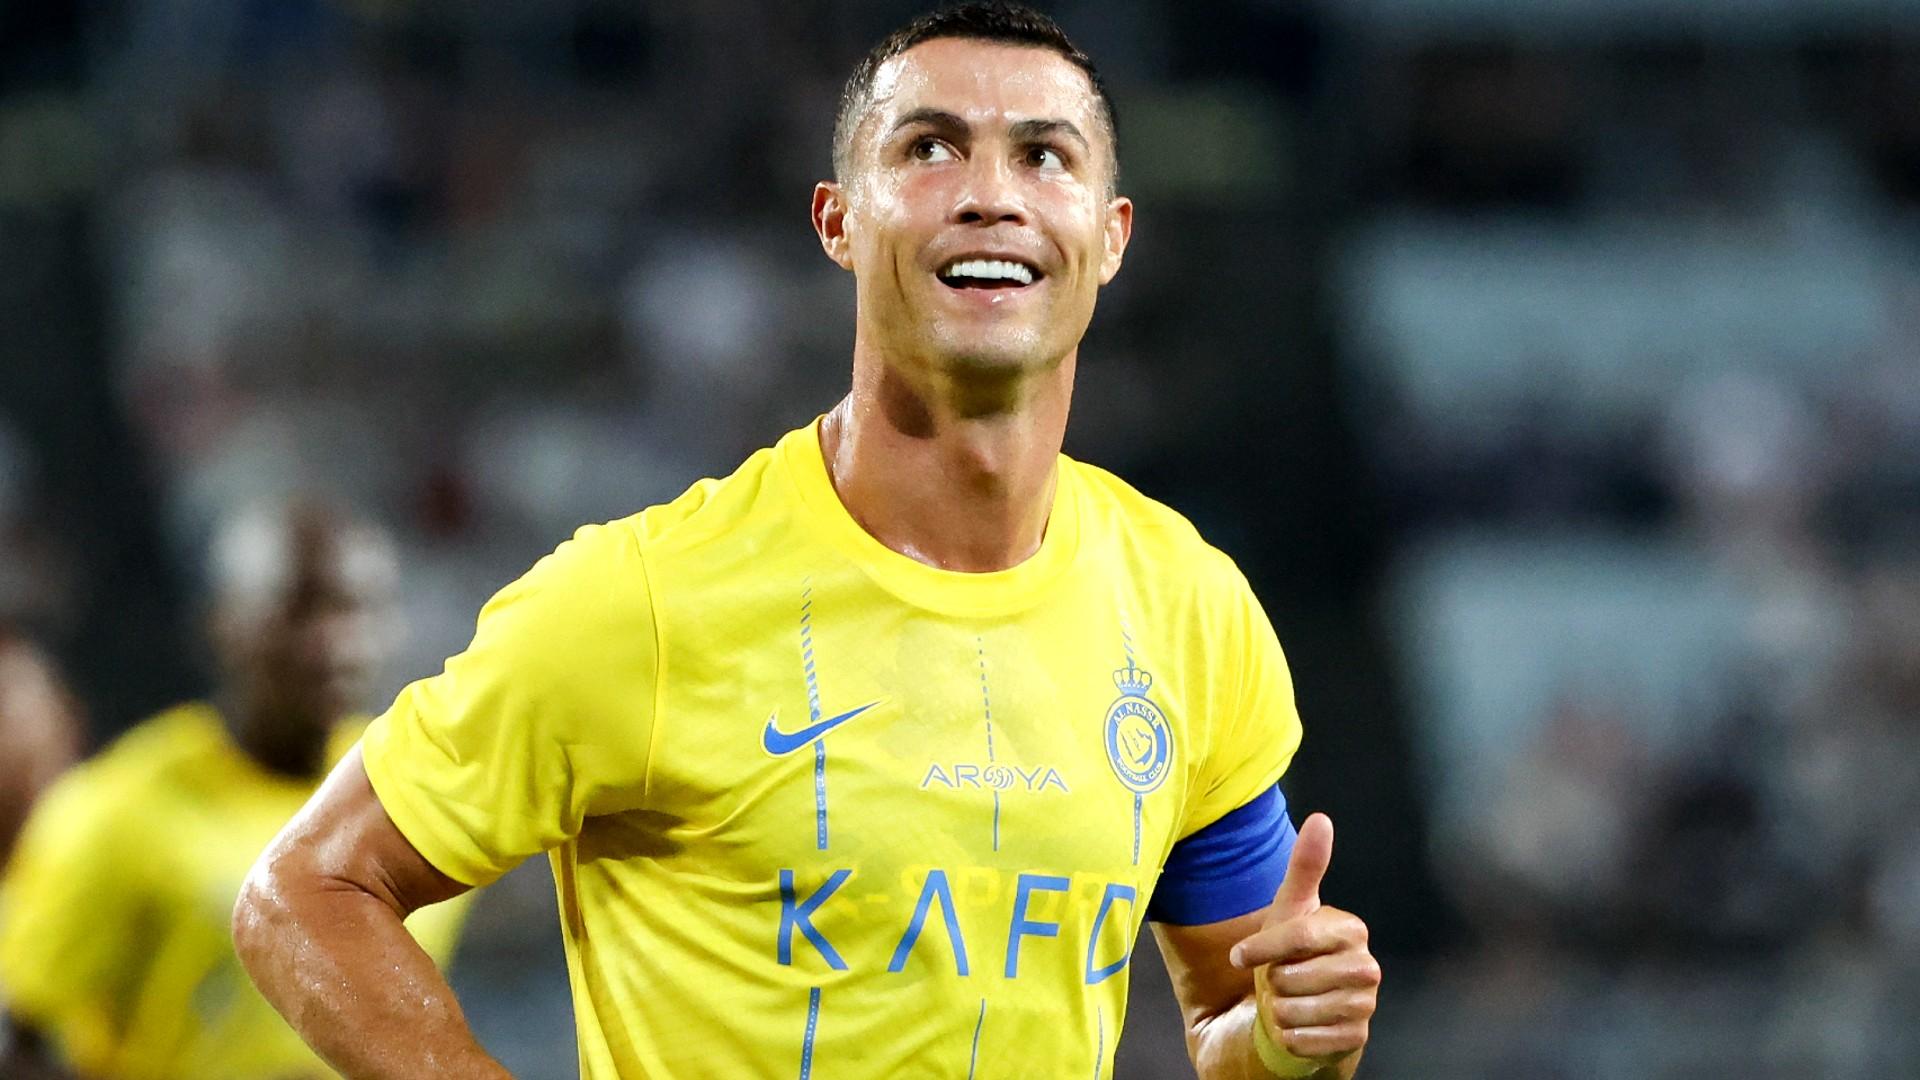 Cristiano Ronaldo under fire after offensive gesture in Saudi league match